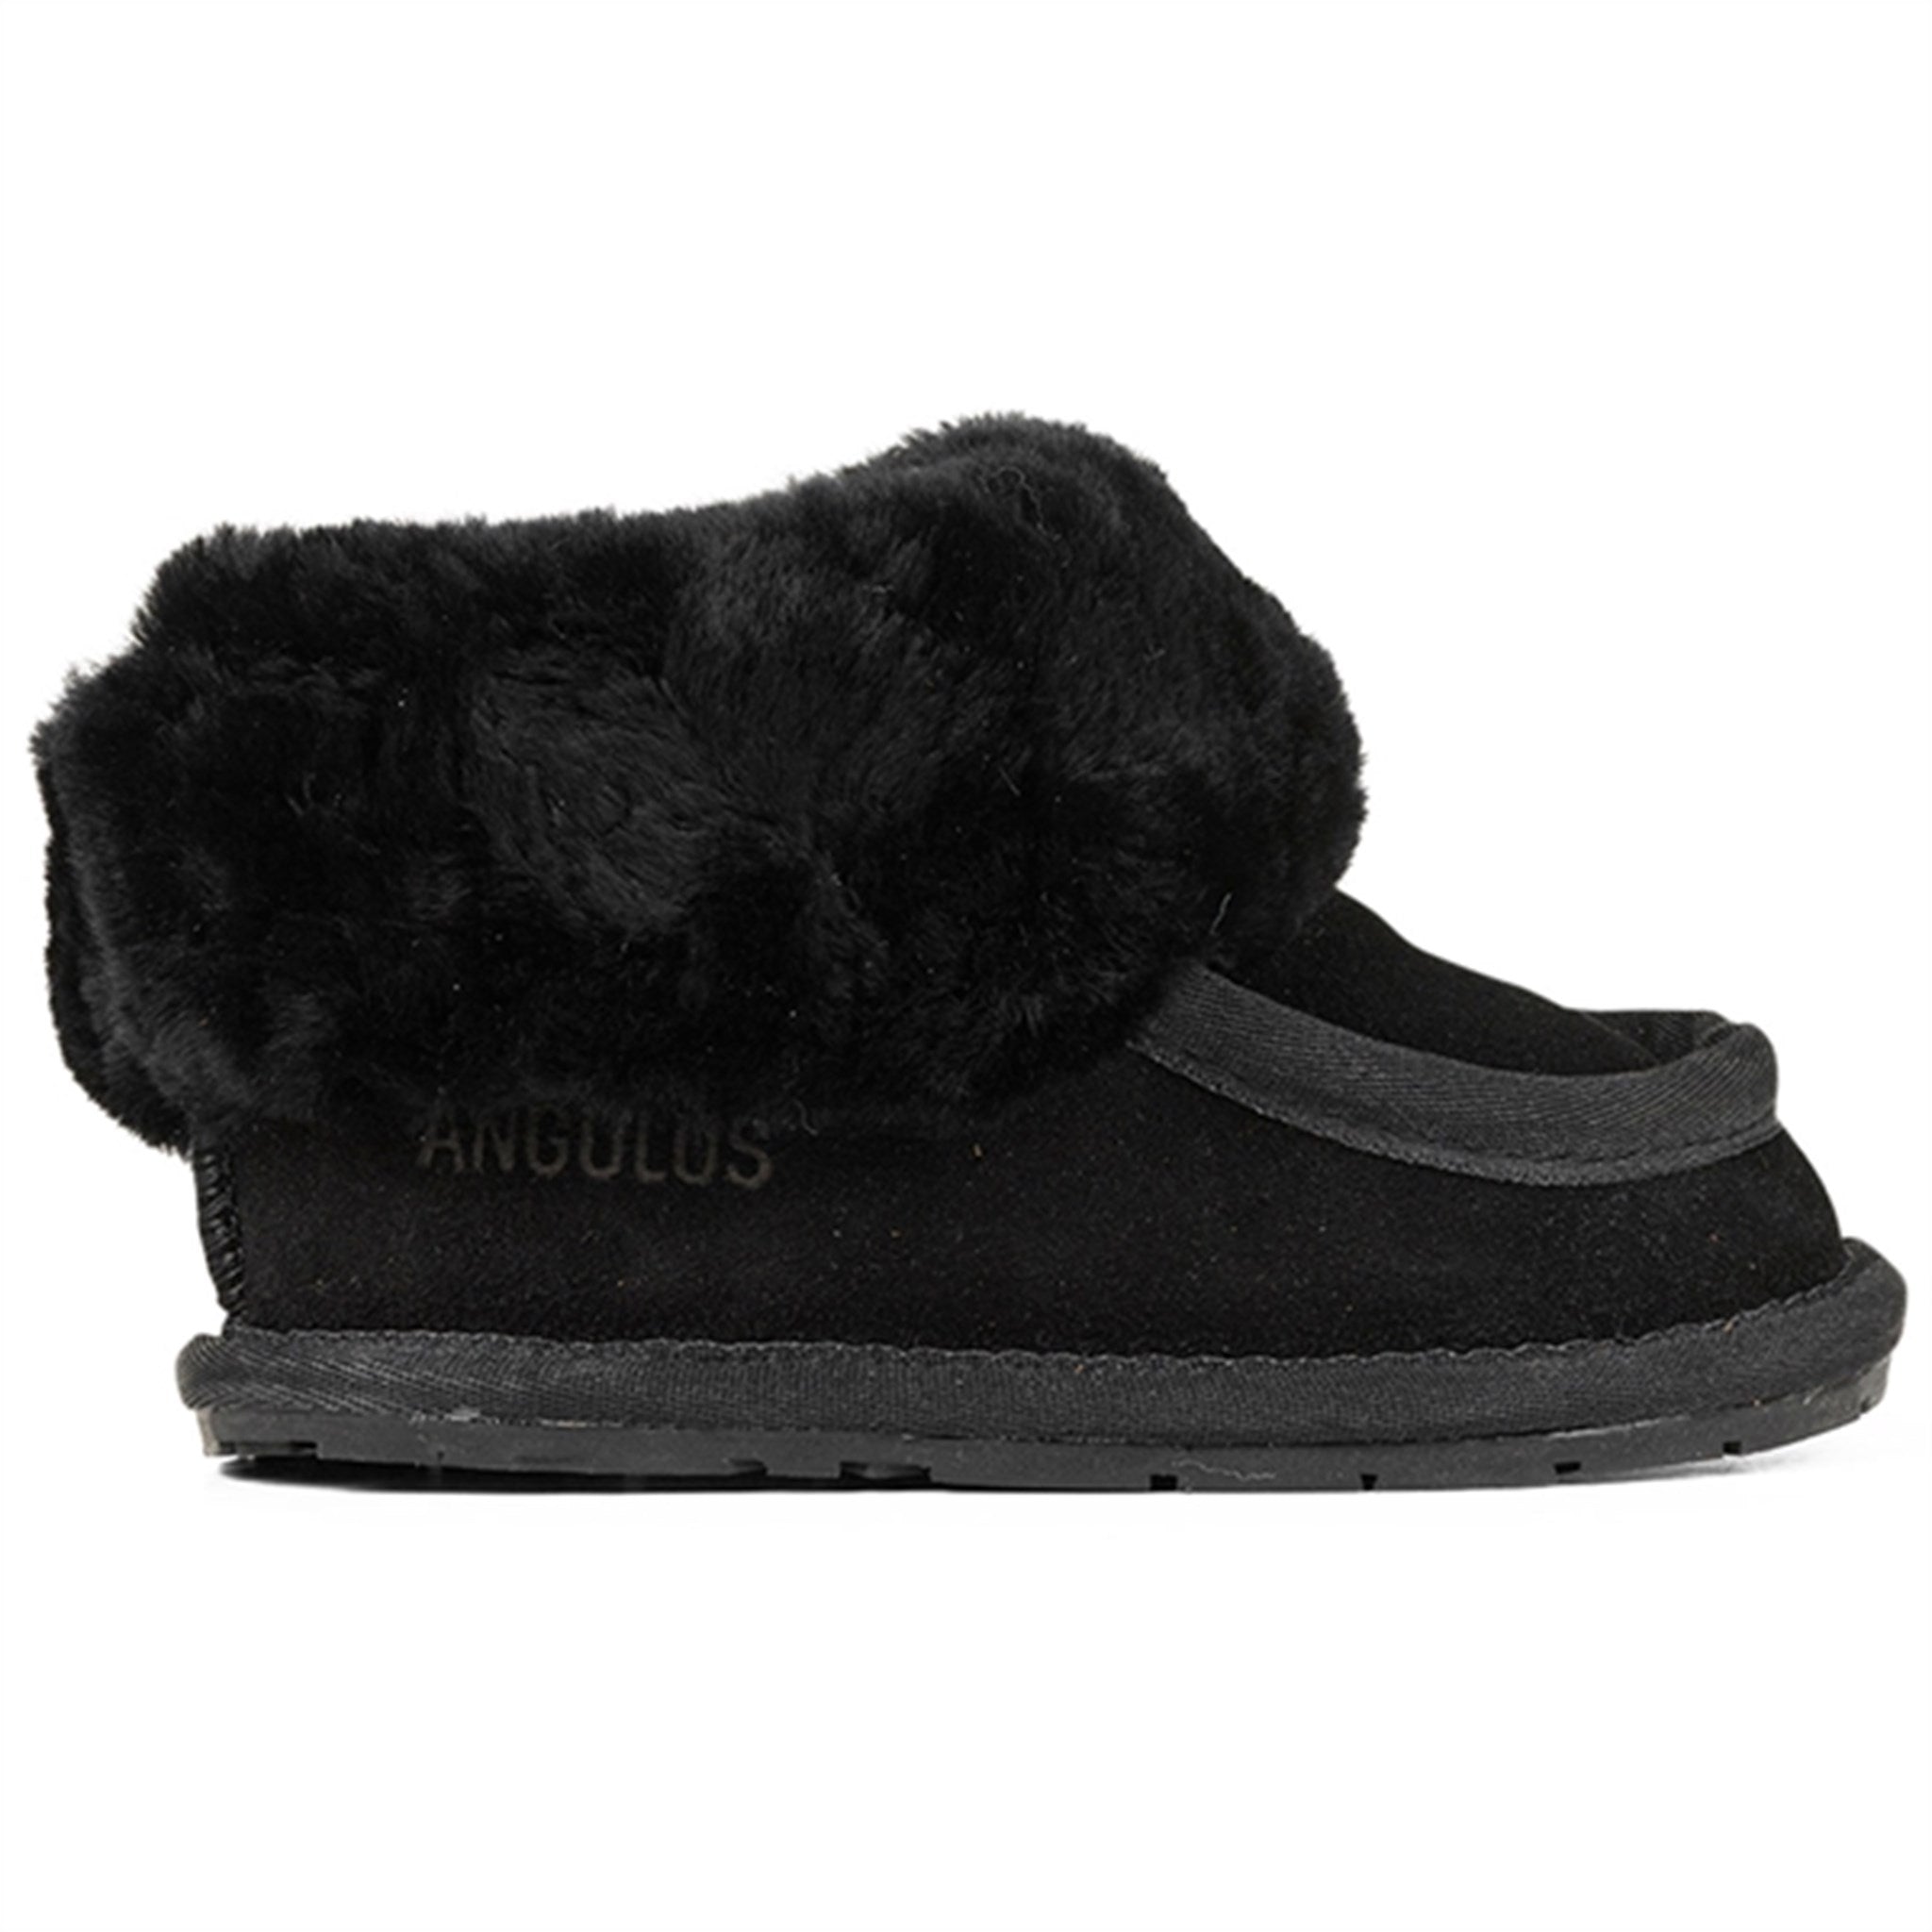 Angulus Lamb Wool Indoor Shoes Black 2